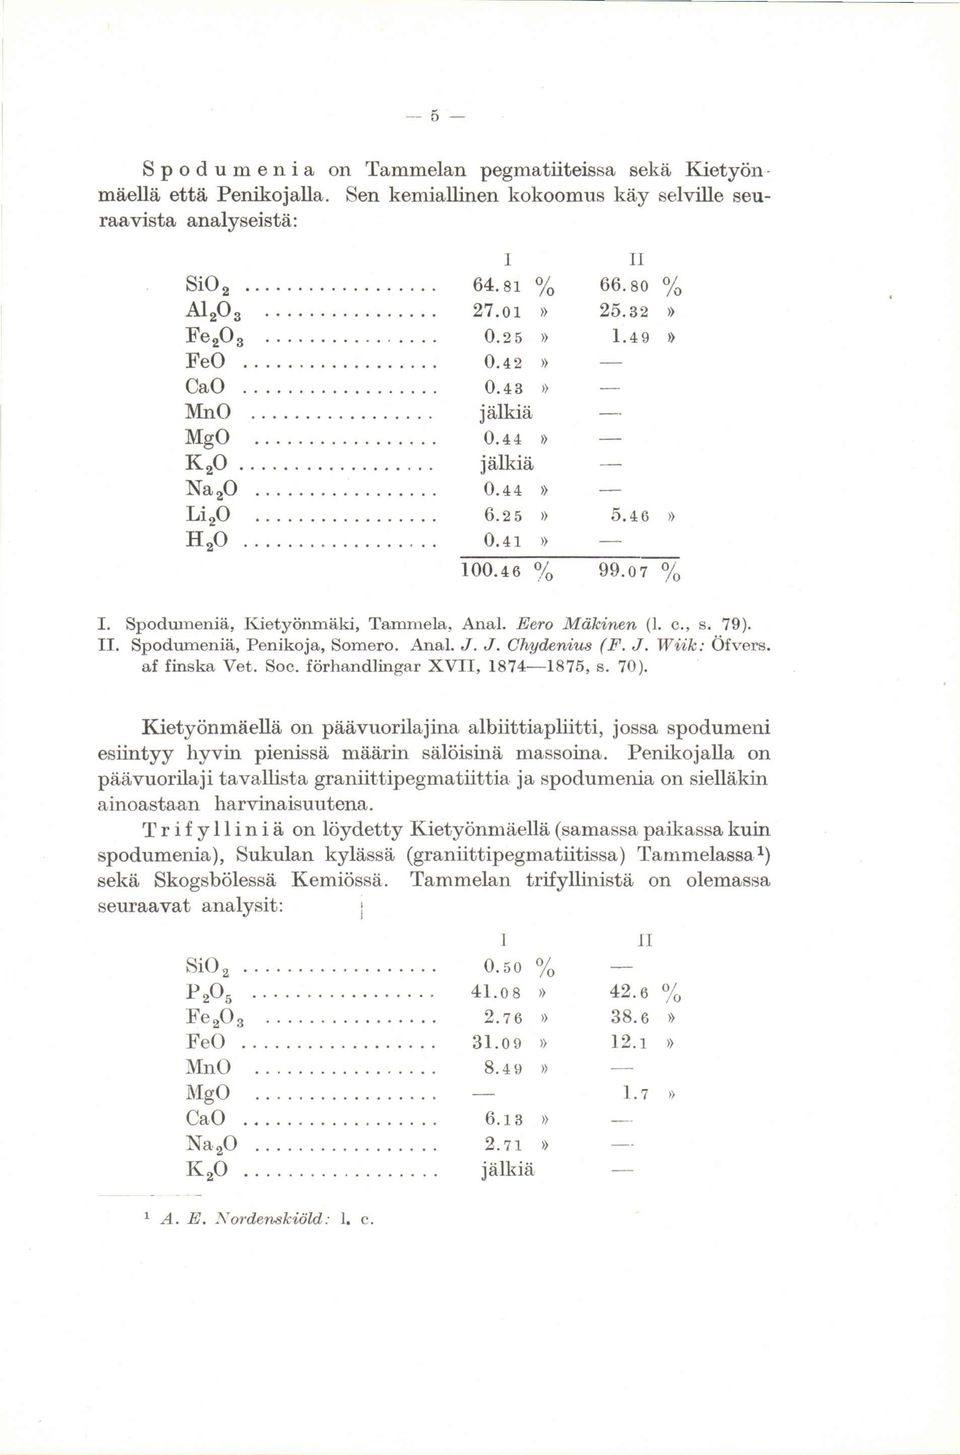 79). If. Spodumeniä, Penikoja, Somero. Anal. J. J. Chgil,enius (8, J, Wi,ik: Öfvers. af finska Vet. Soc. förhandlingar XVII, 18?4-1875, s. 70).